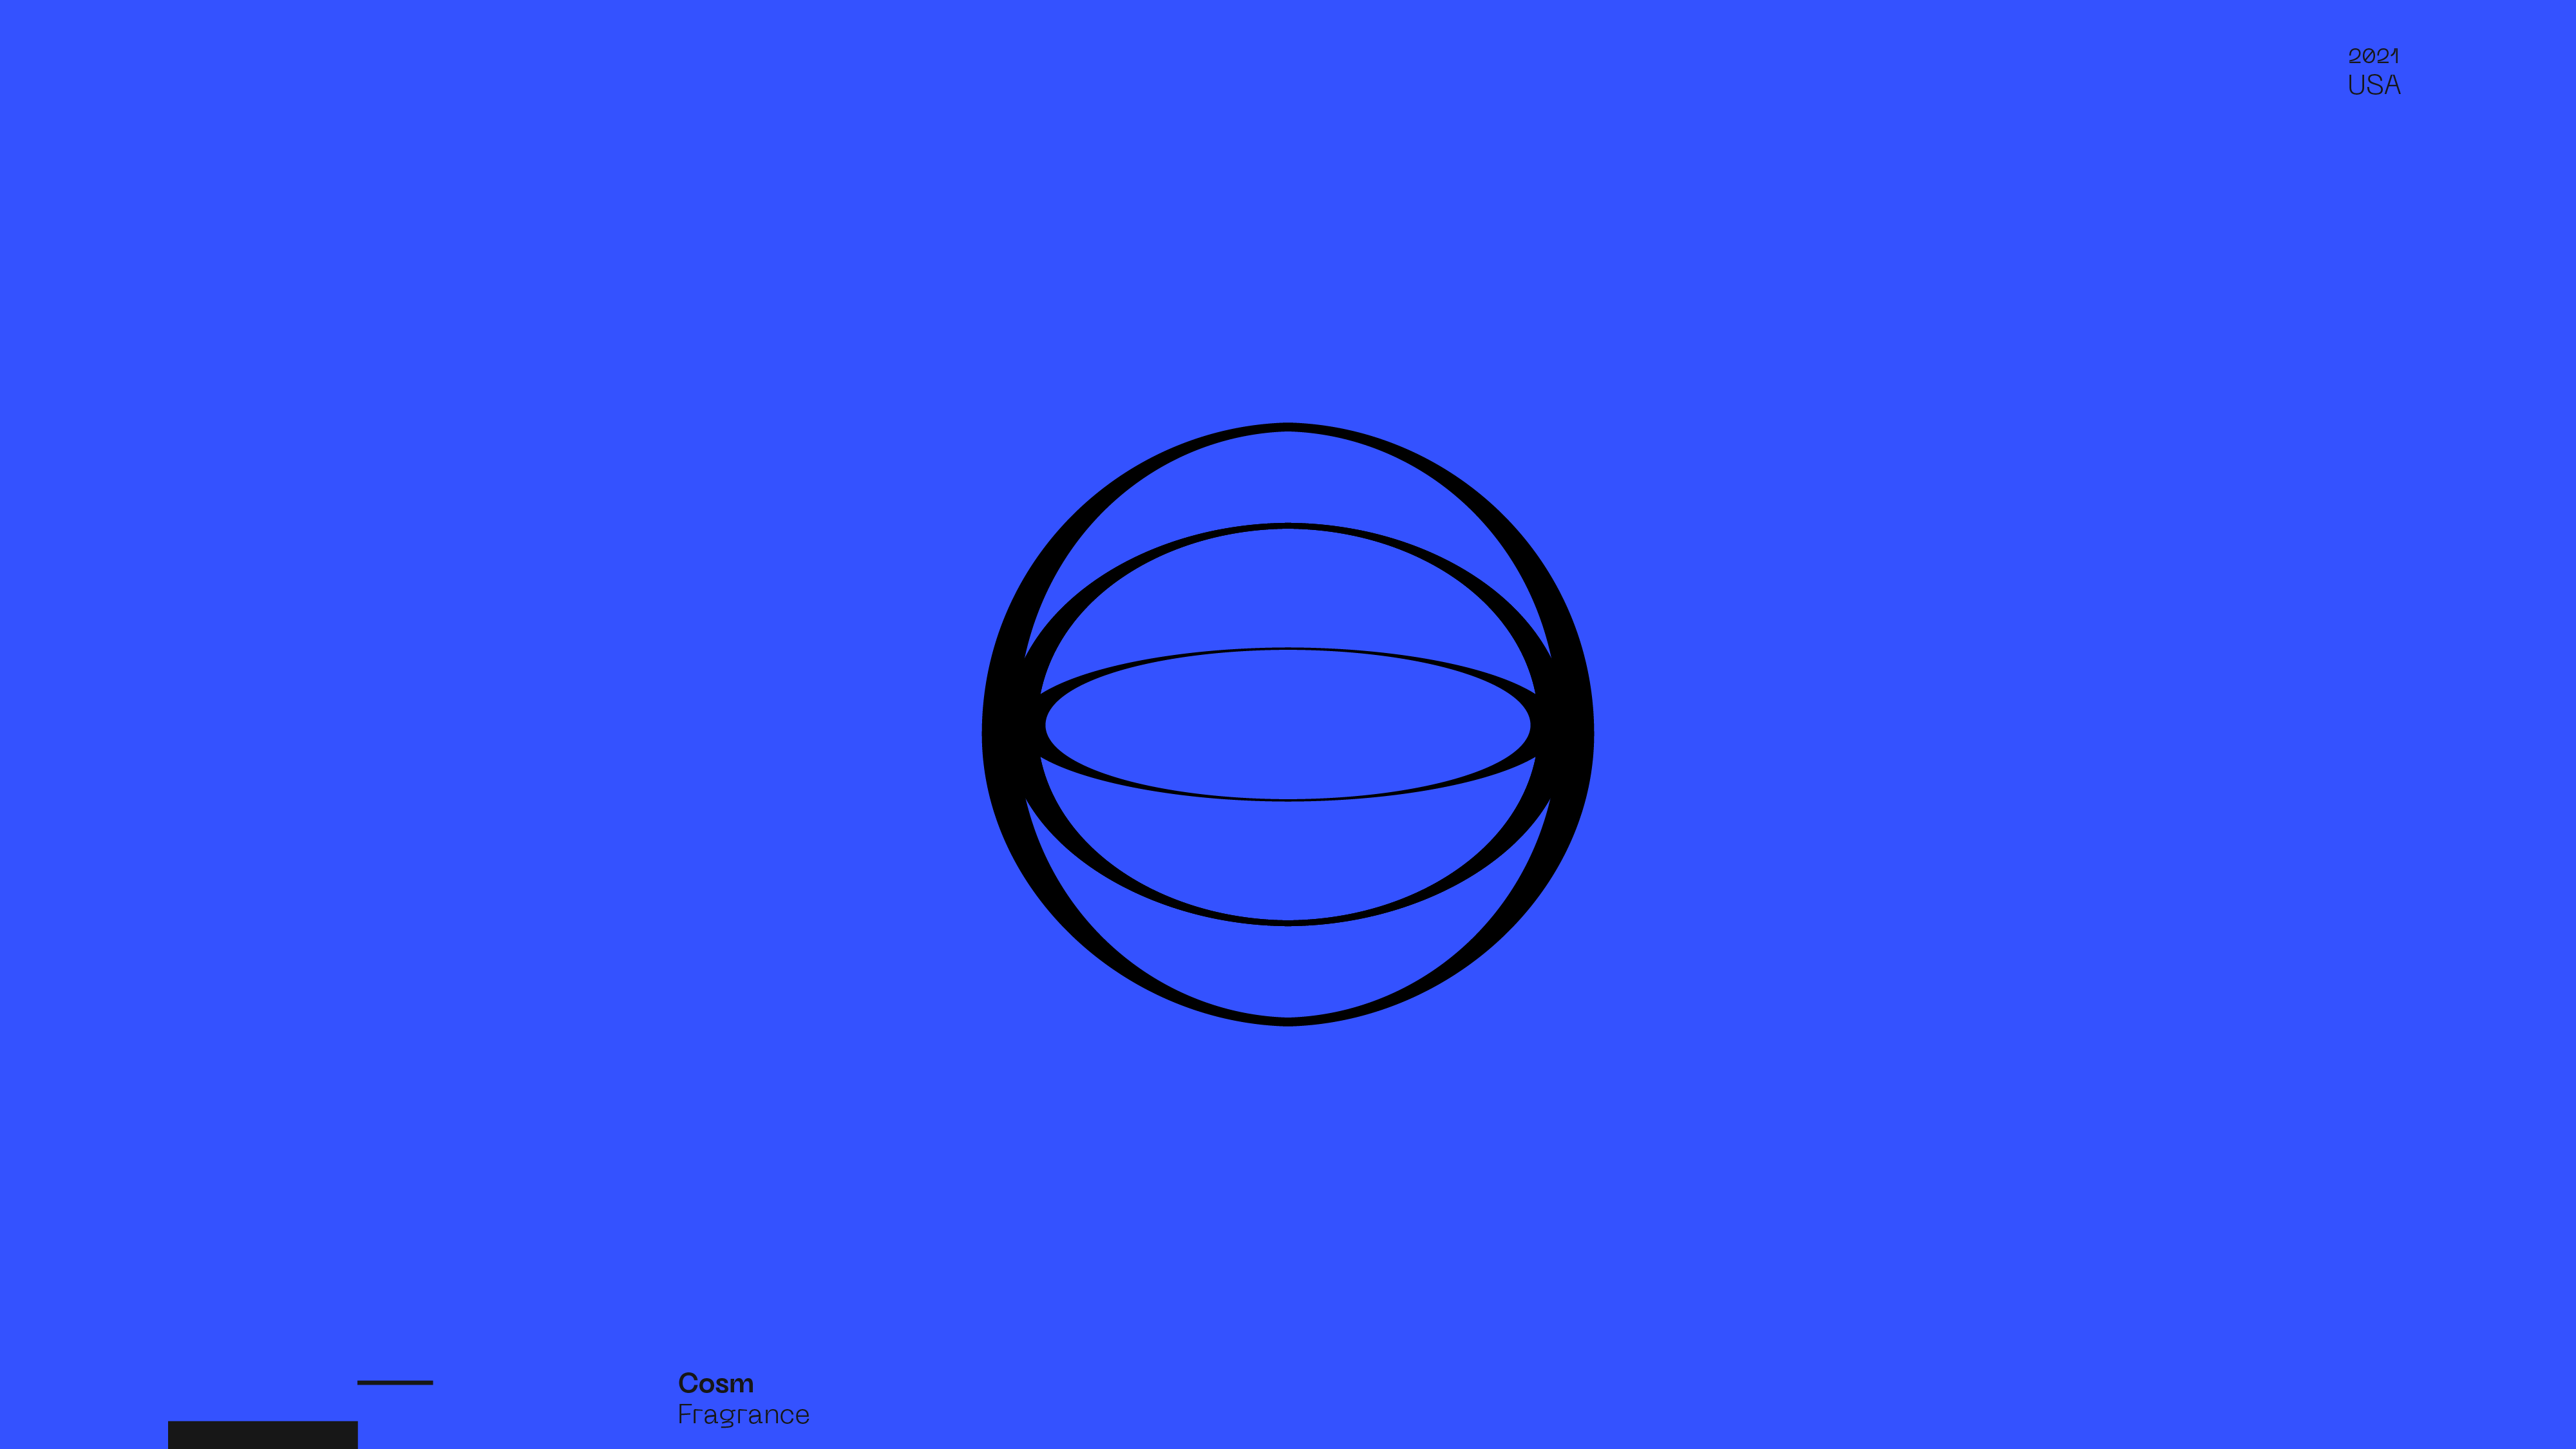 Guapo Design Studio by Esteban Ibarra Logofolio — Cosm